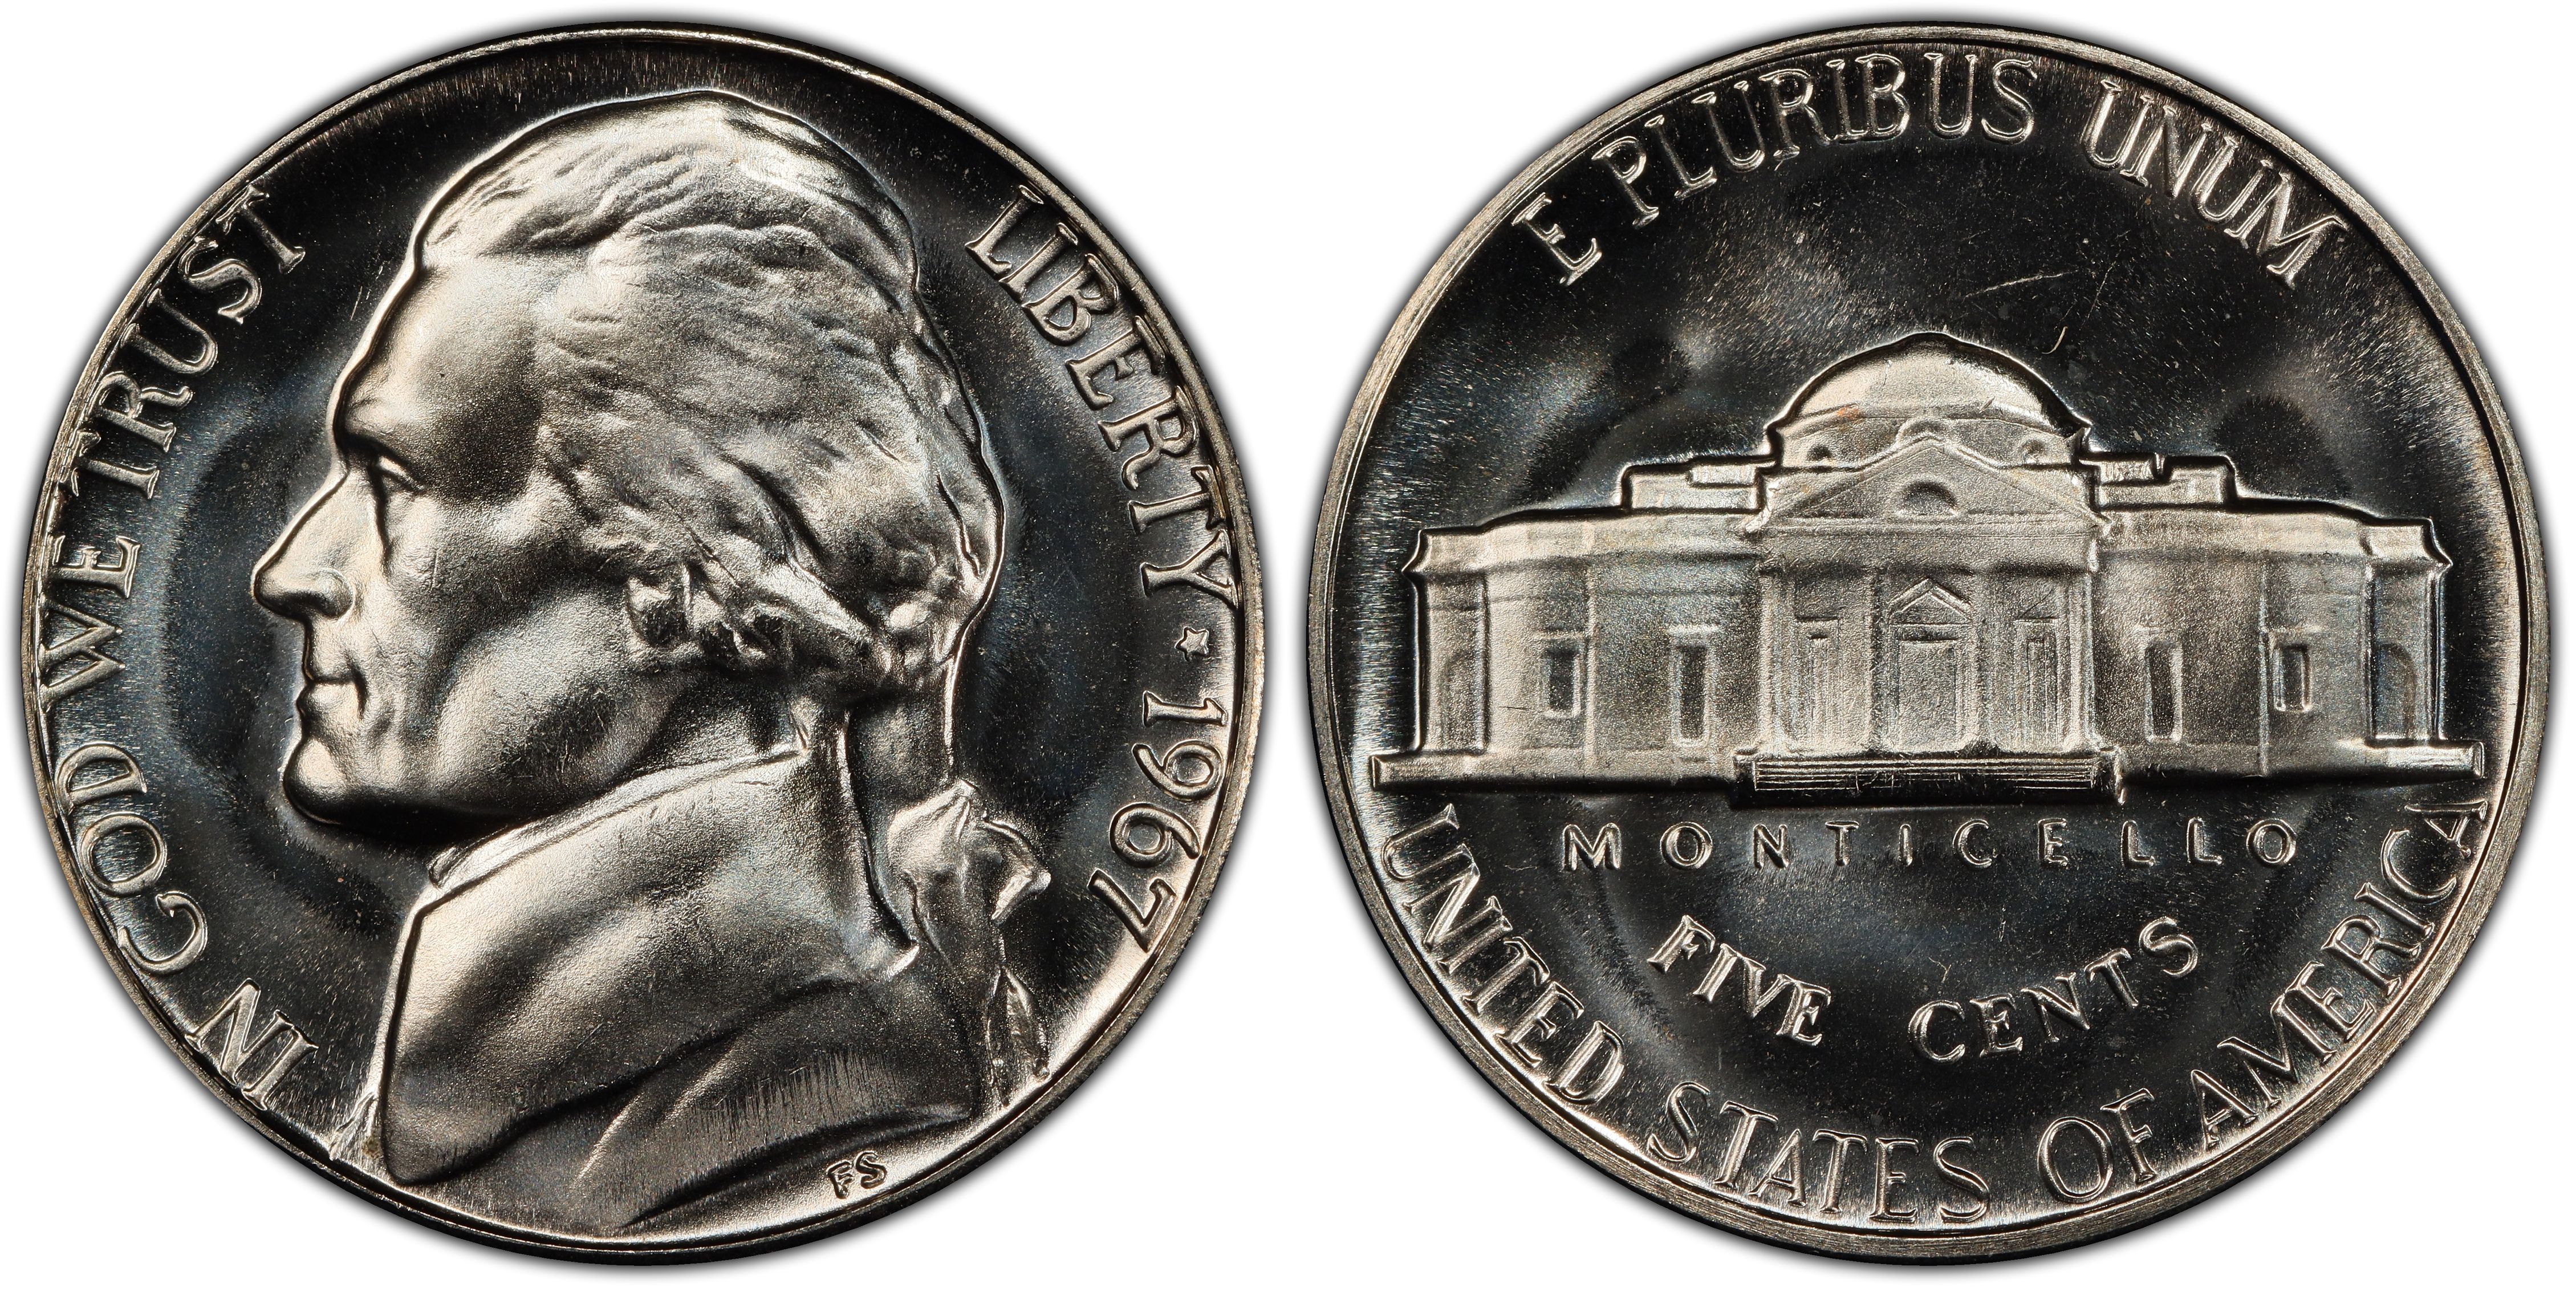 1965 1966 1967 SMS Special Mint Set Jefferson Nickels 